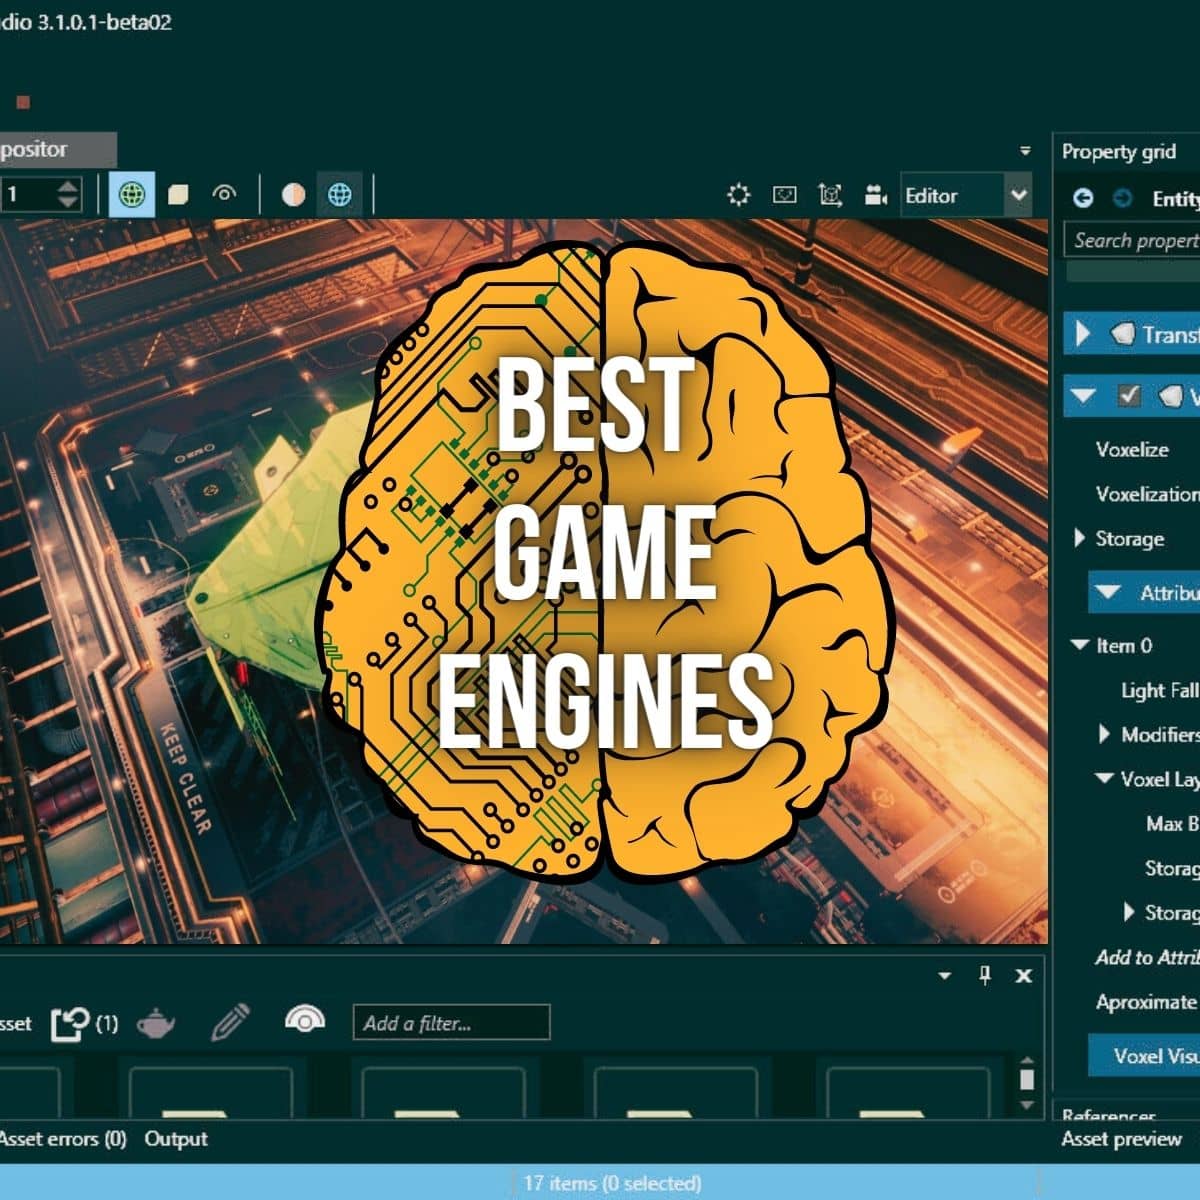 Gman - Screenshots - Ultra Engine Community - Best game engine for